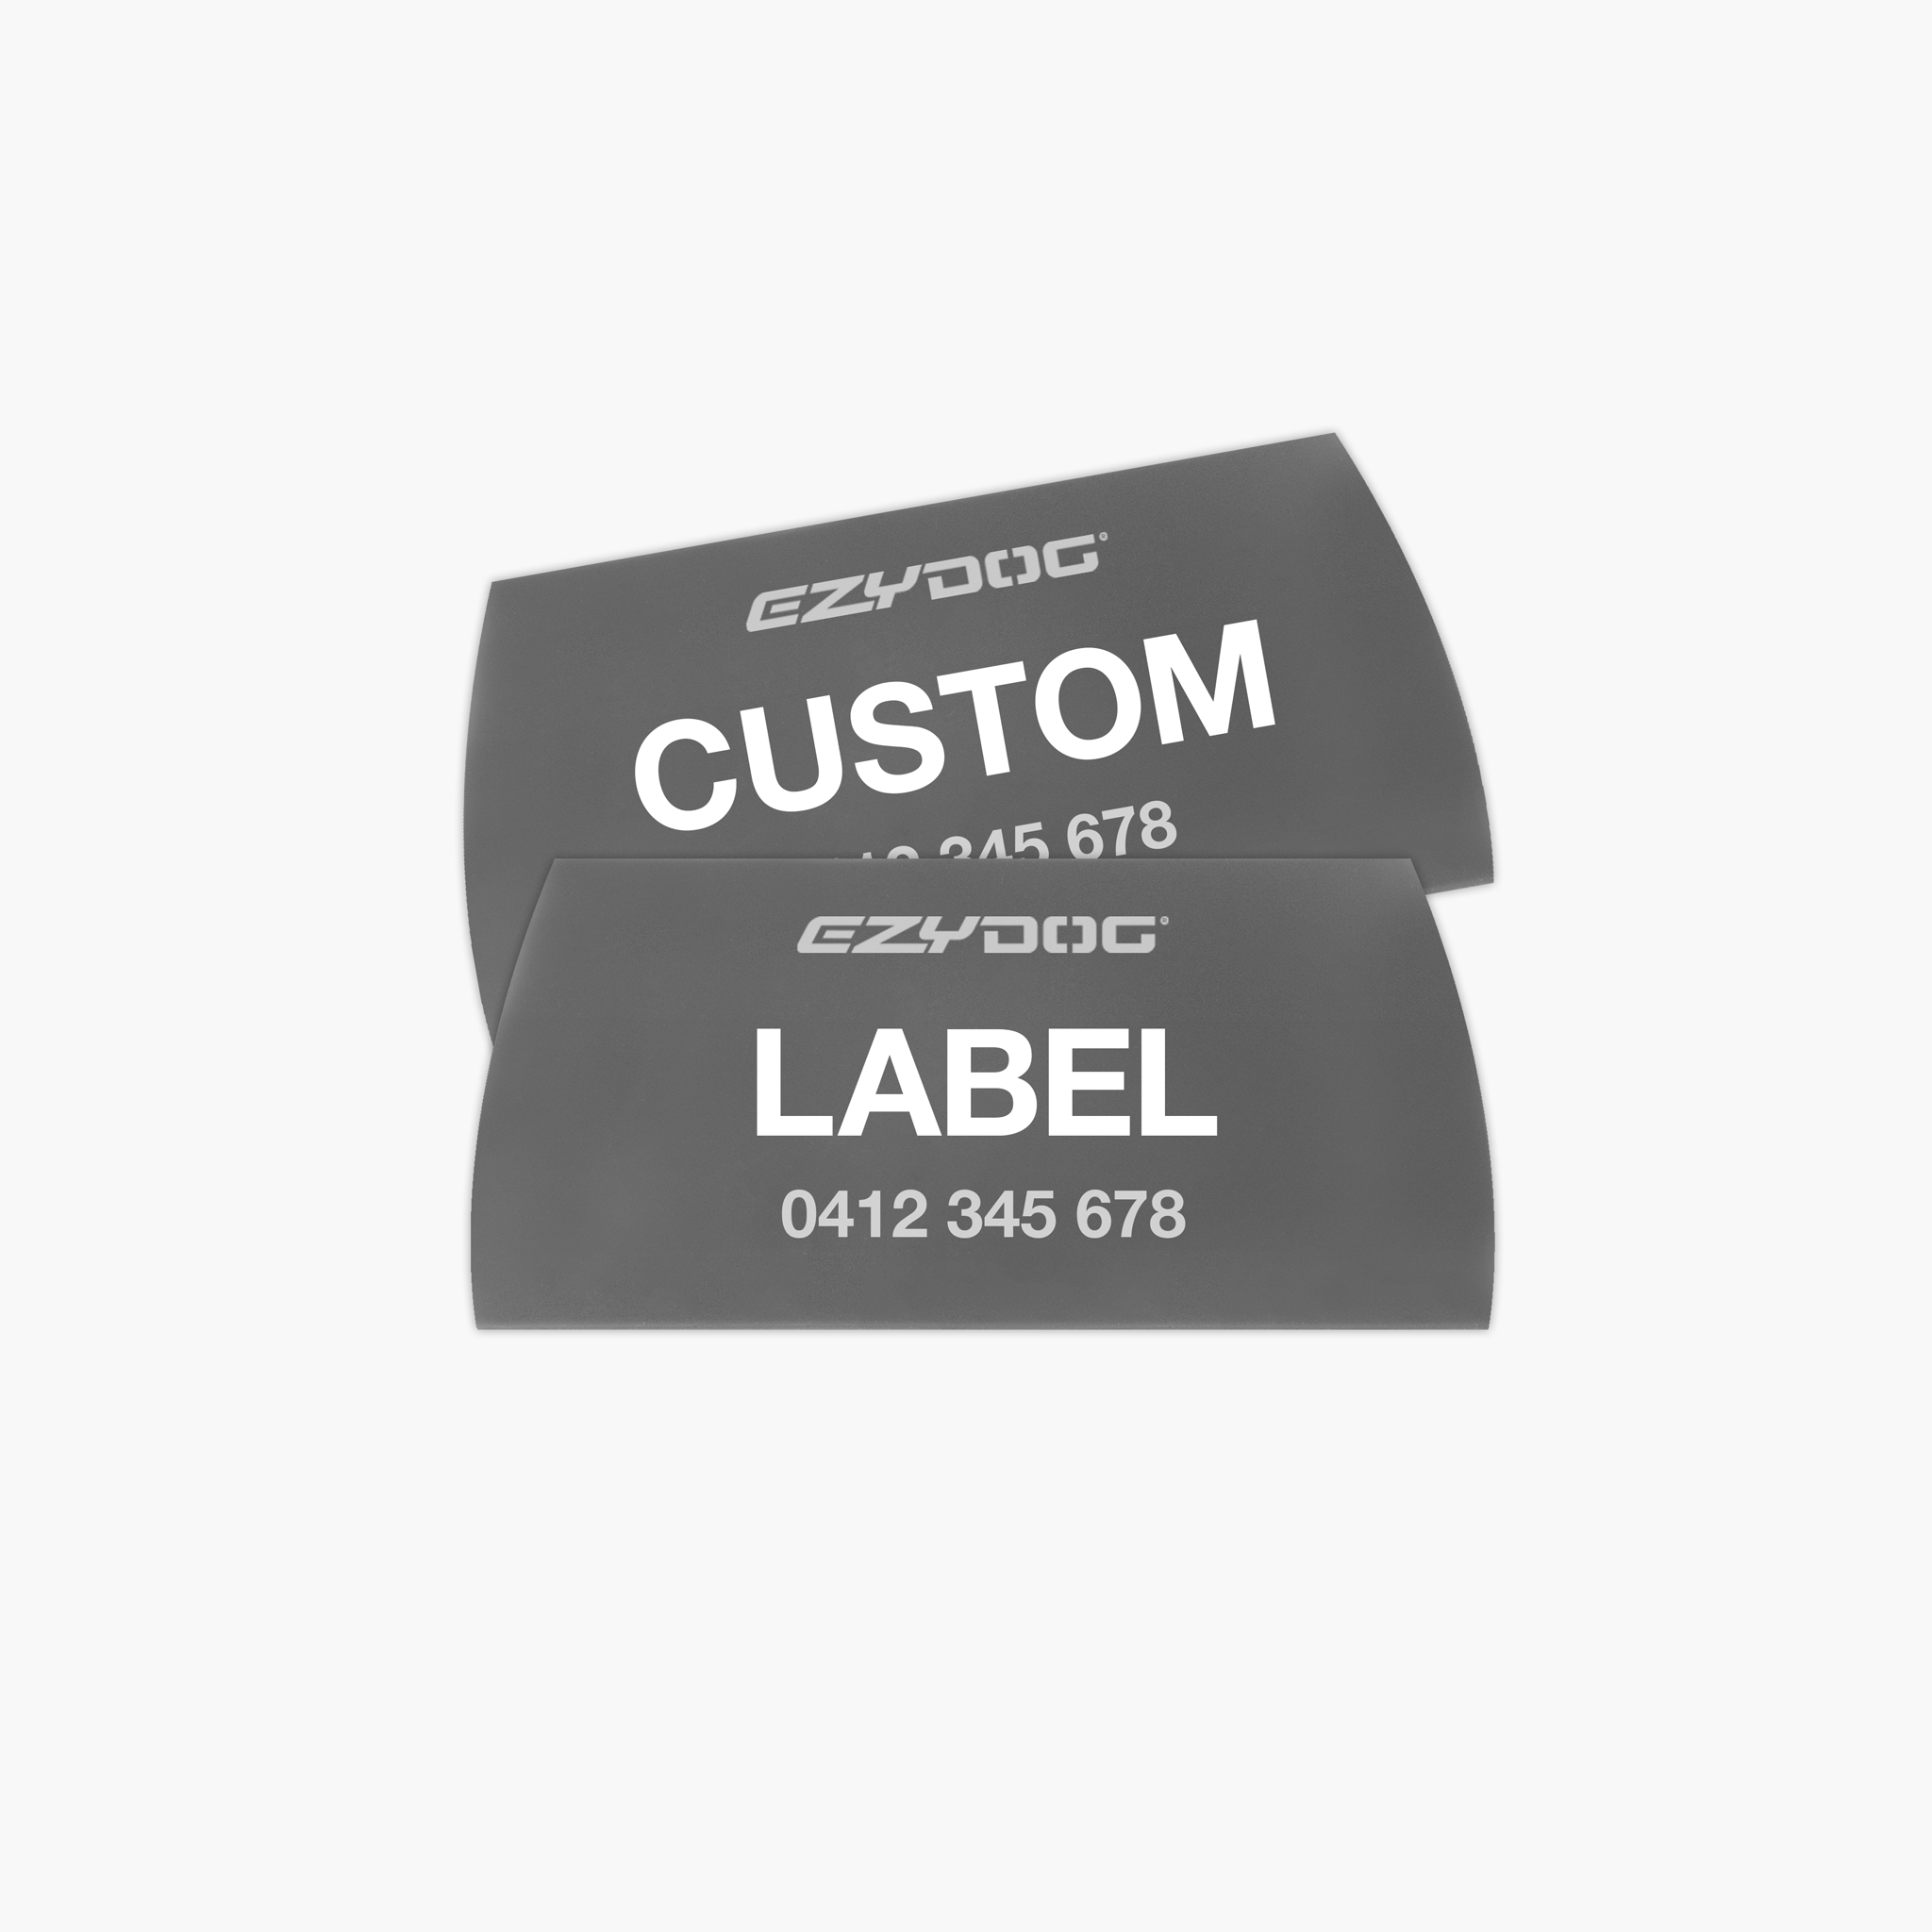 Custom Labels